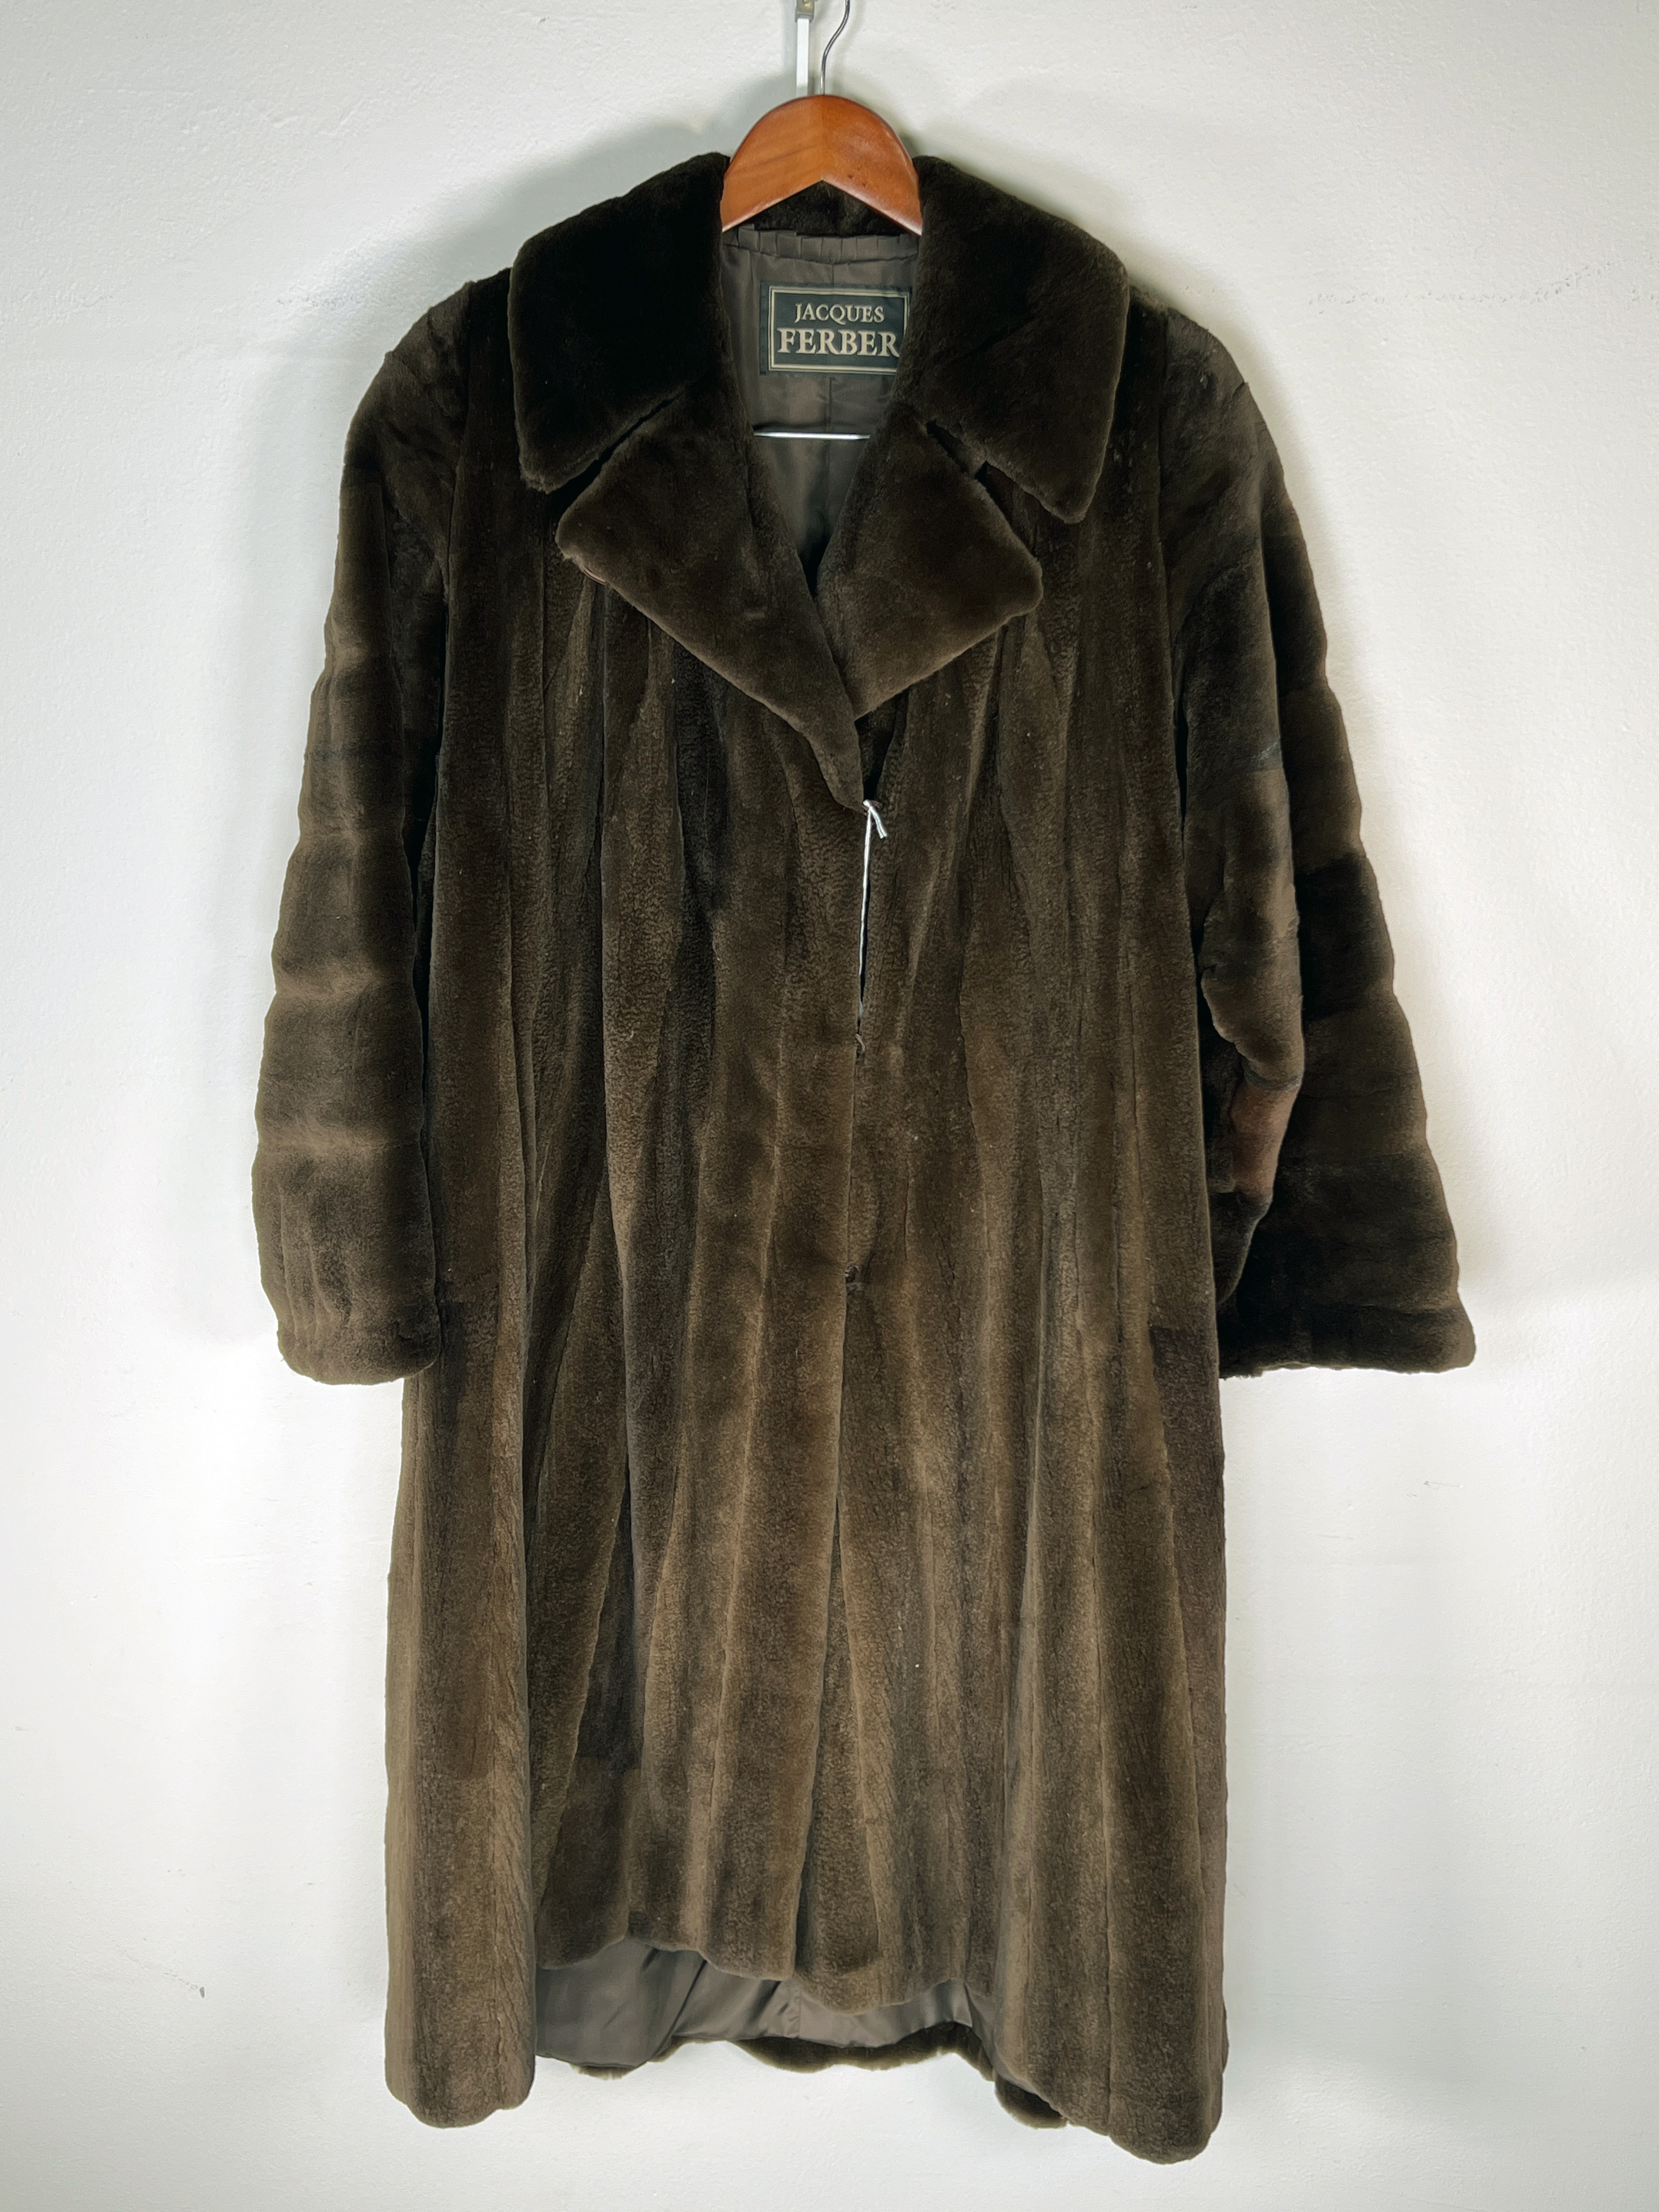 Jacques Ferber Sheared Fur Coat image 1